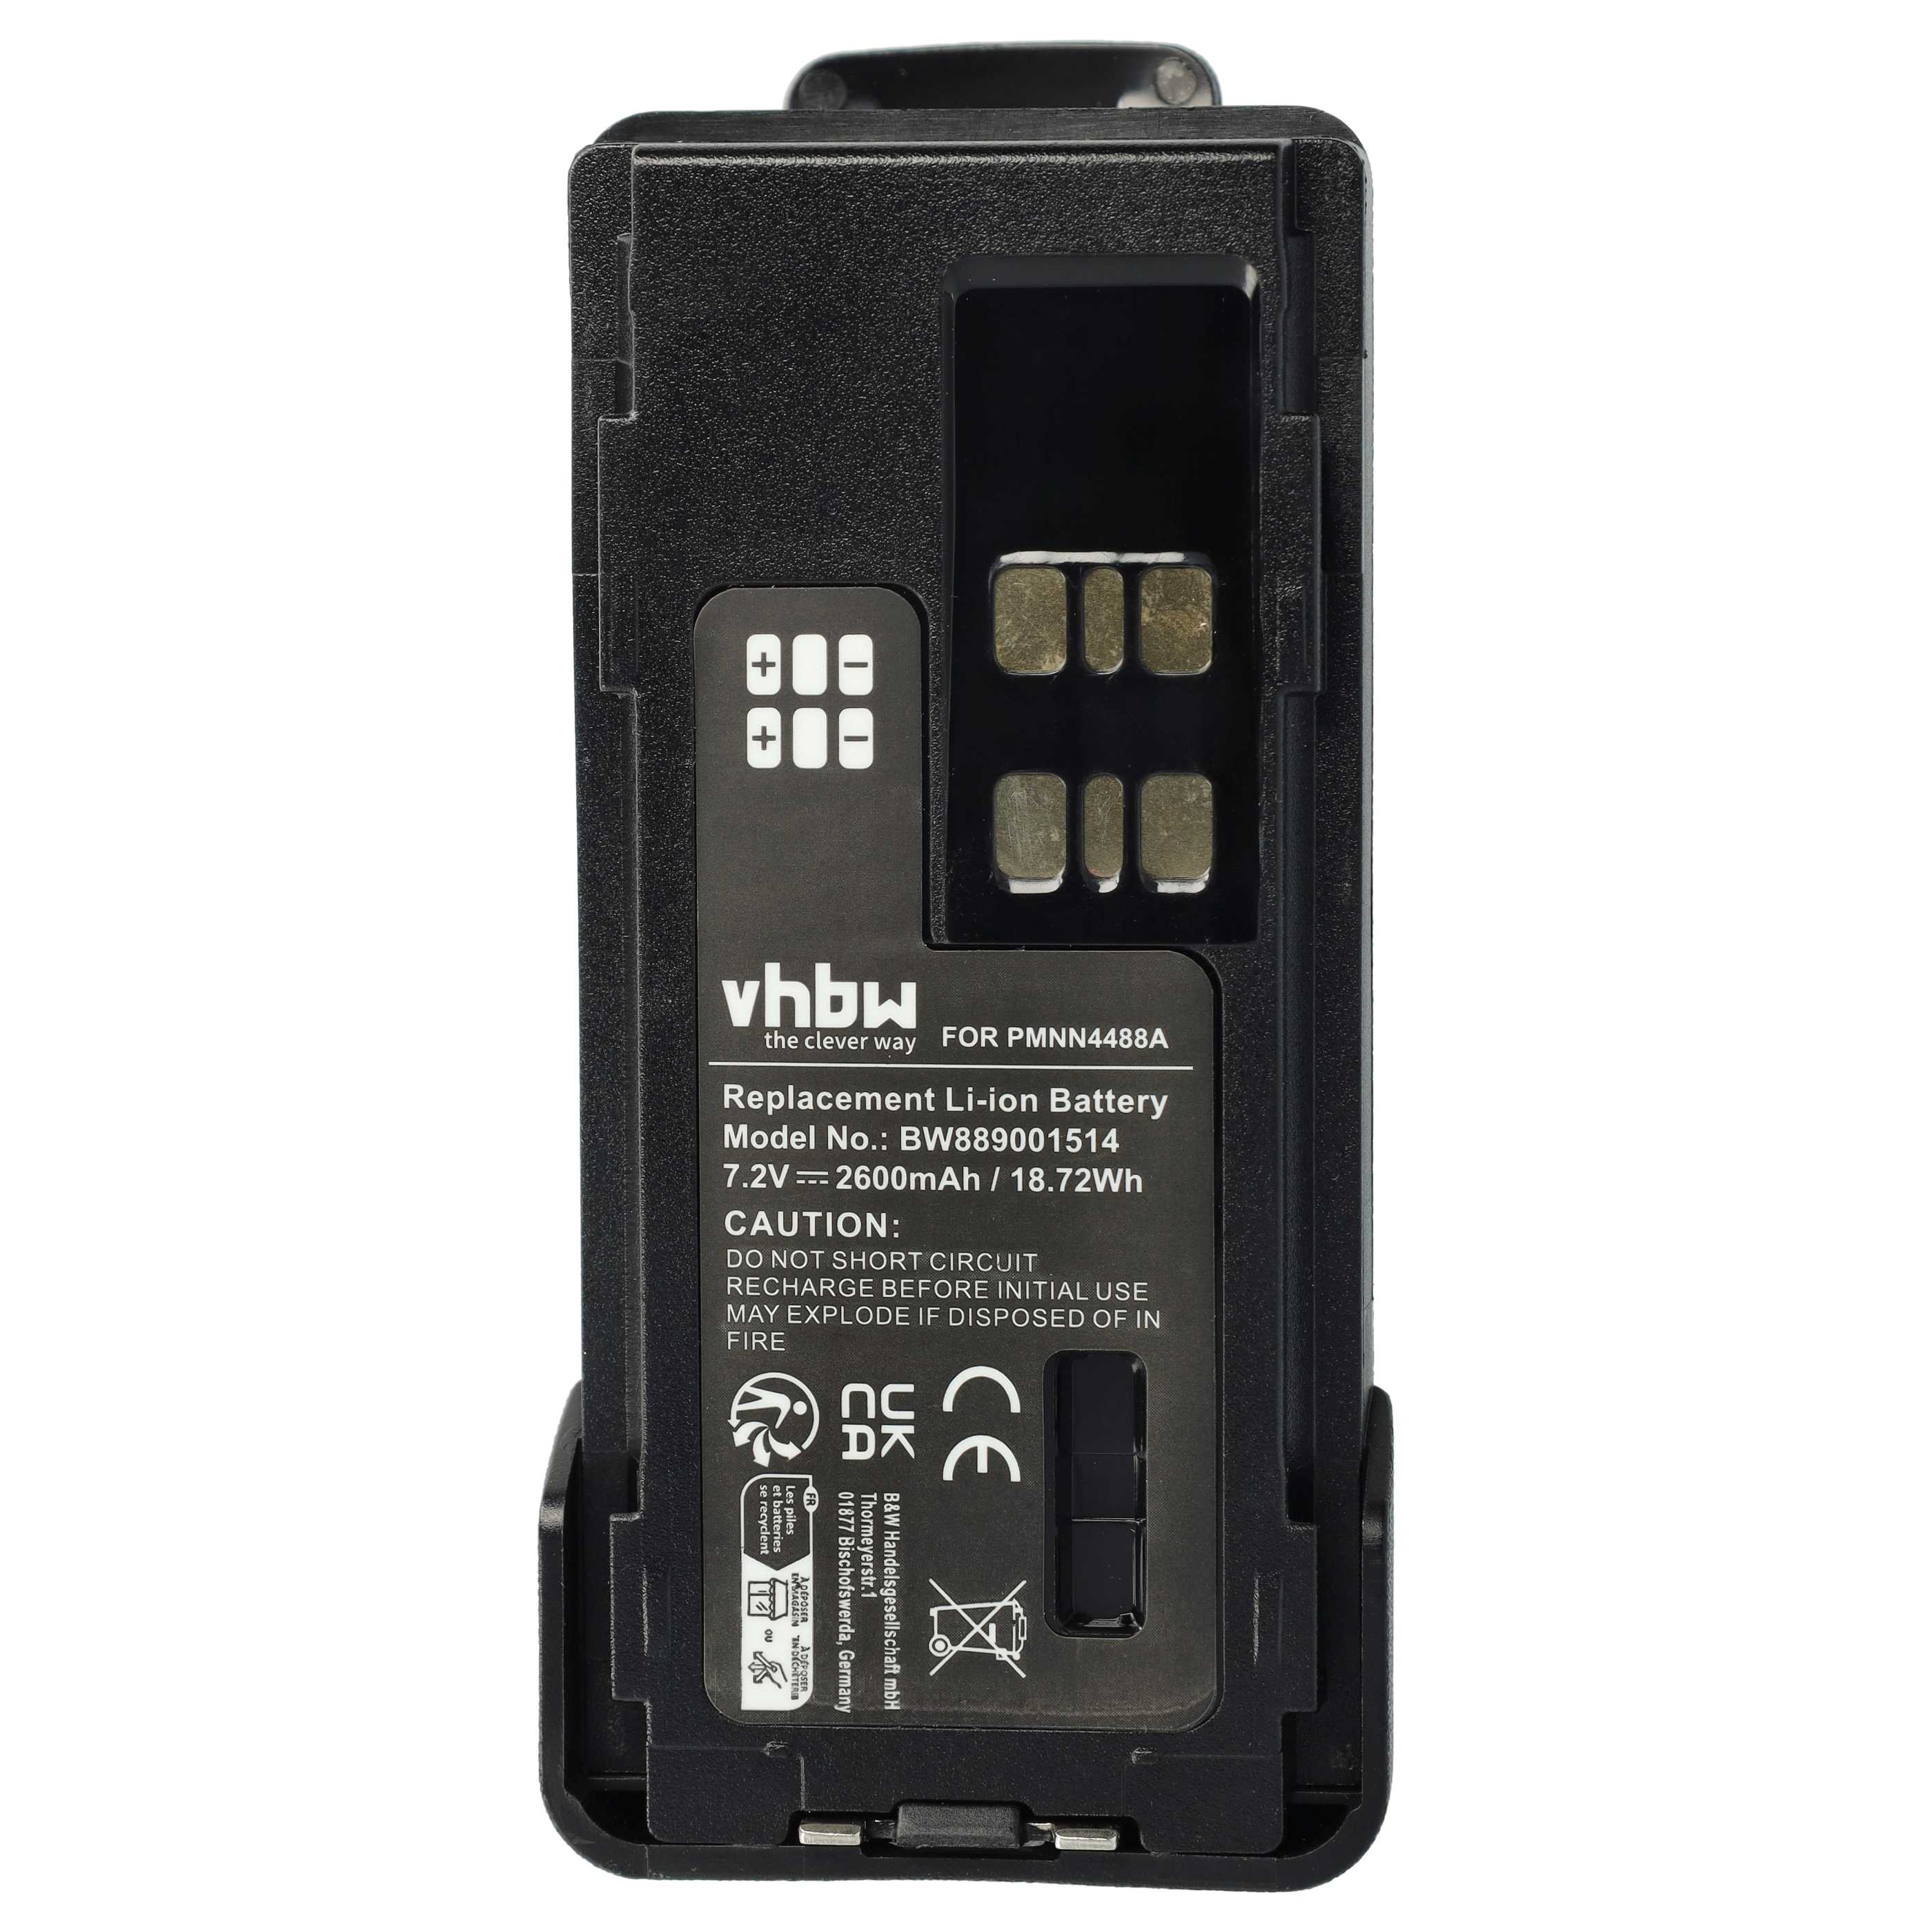 Akumulator do radiotelefonu zamiennik Motorola PMNN4415, PMNN441 - 2600 mAh 7,4 V Li-Ion + klips na pasek